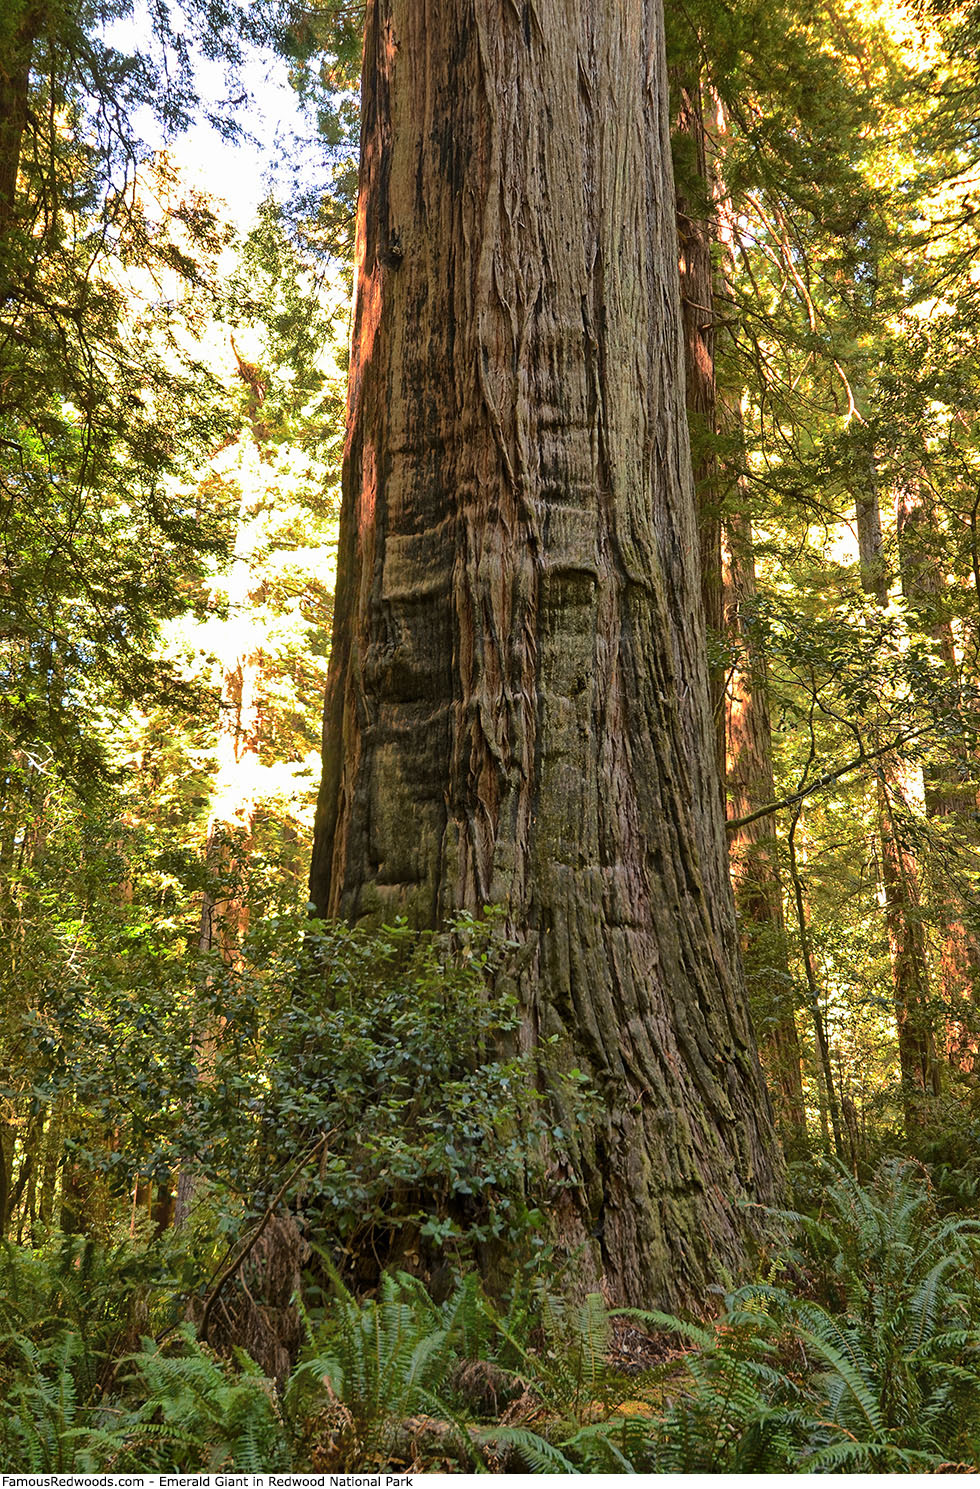 Redwood National Park - Emerald Giant Tree